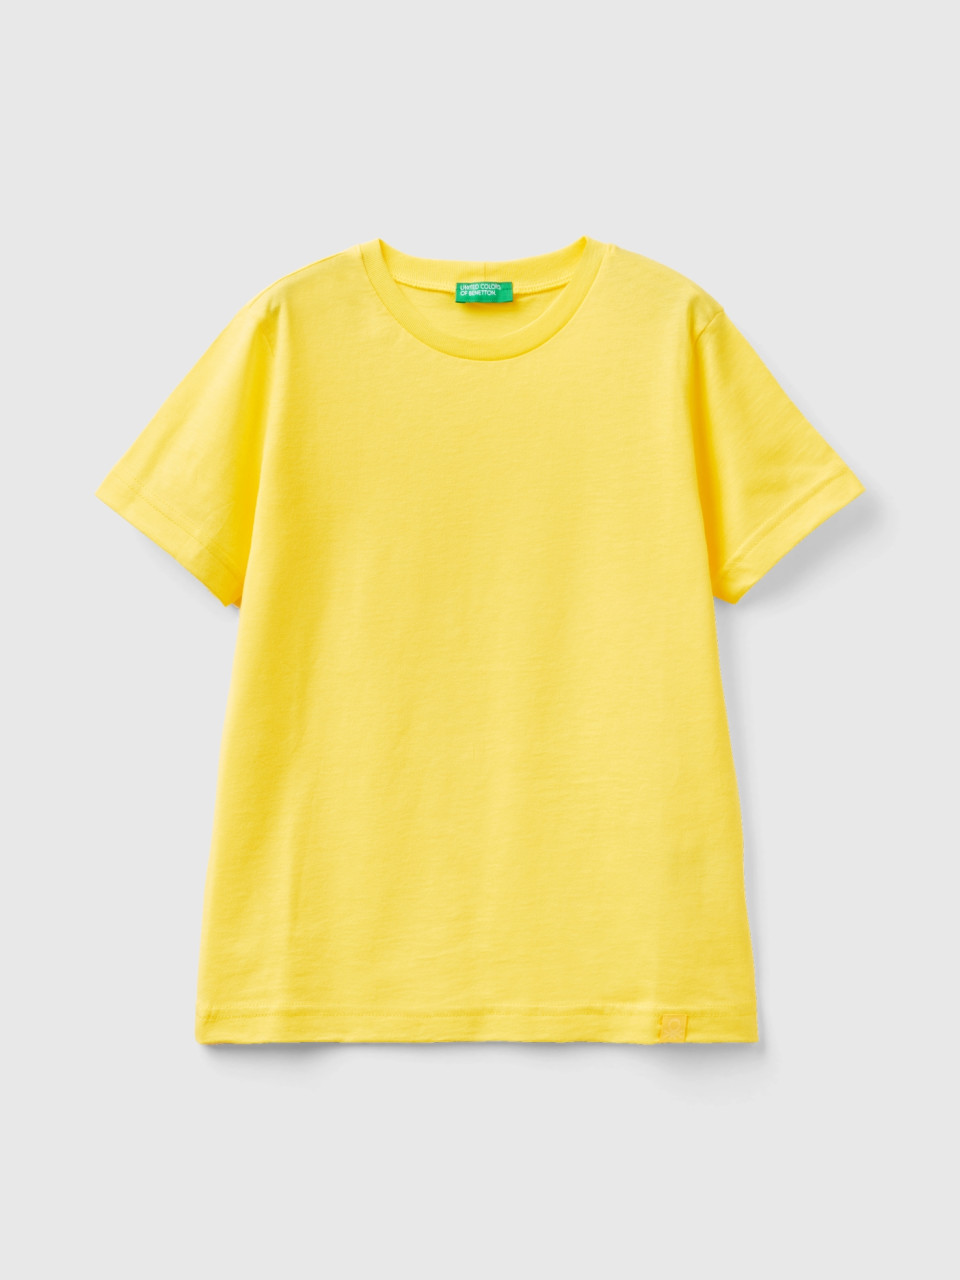 Benetton, Camiseta De Algodón Orgánico, Amarillo, Niños